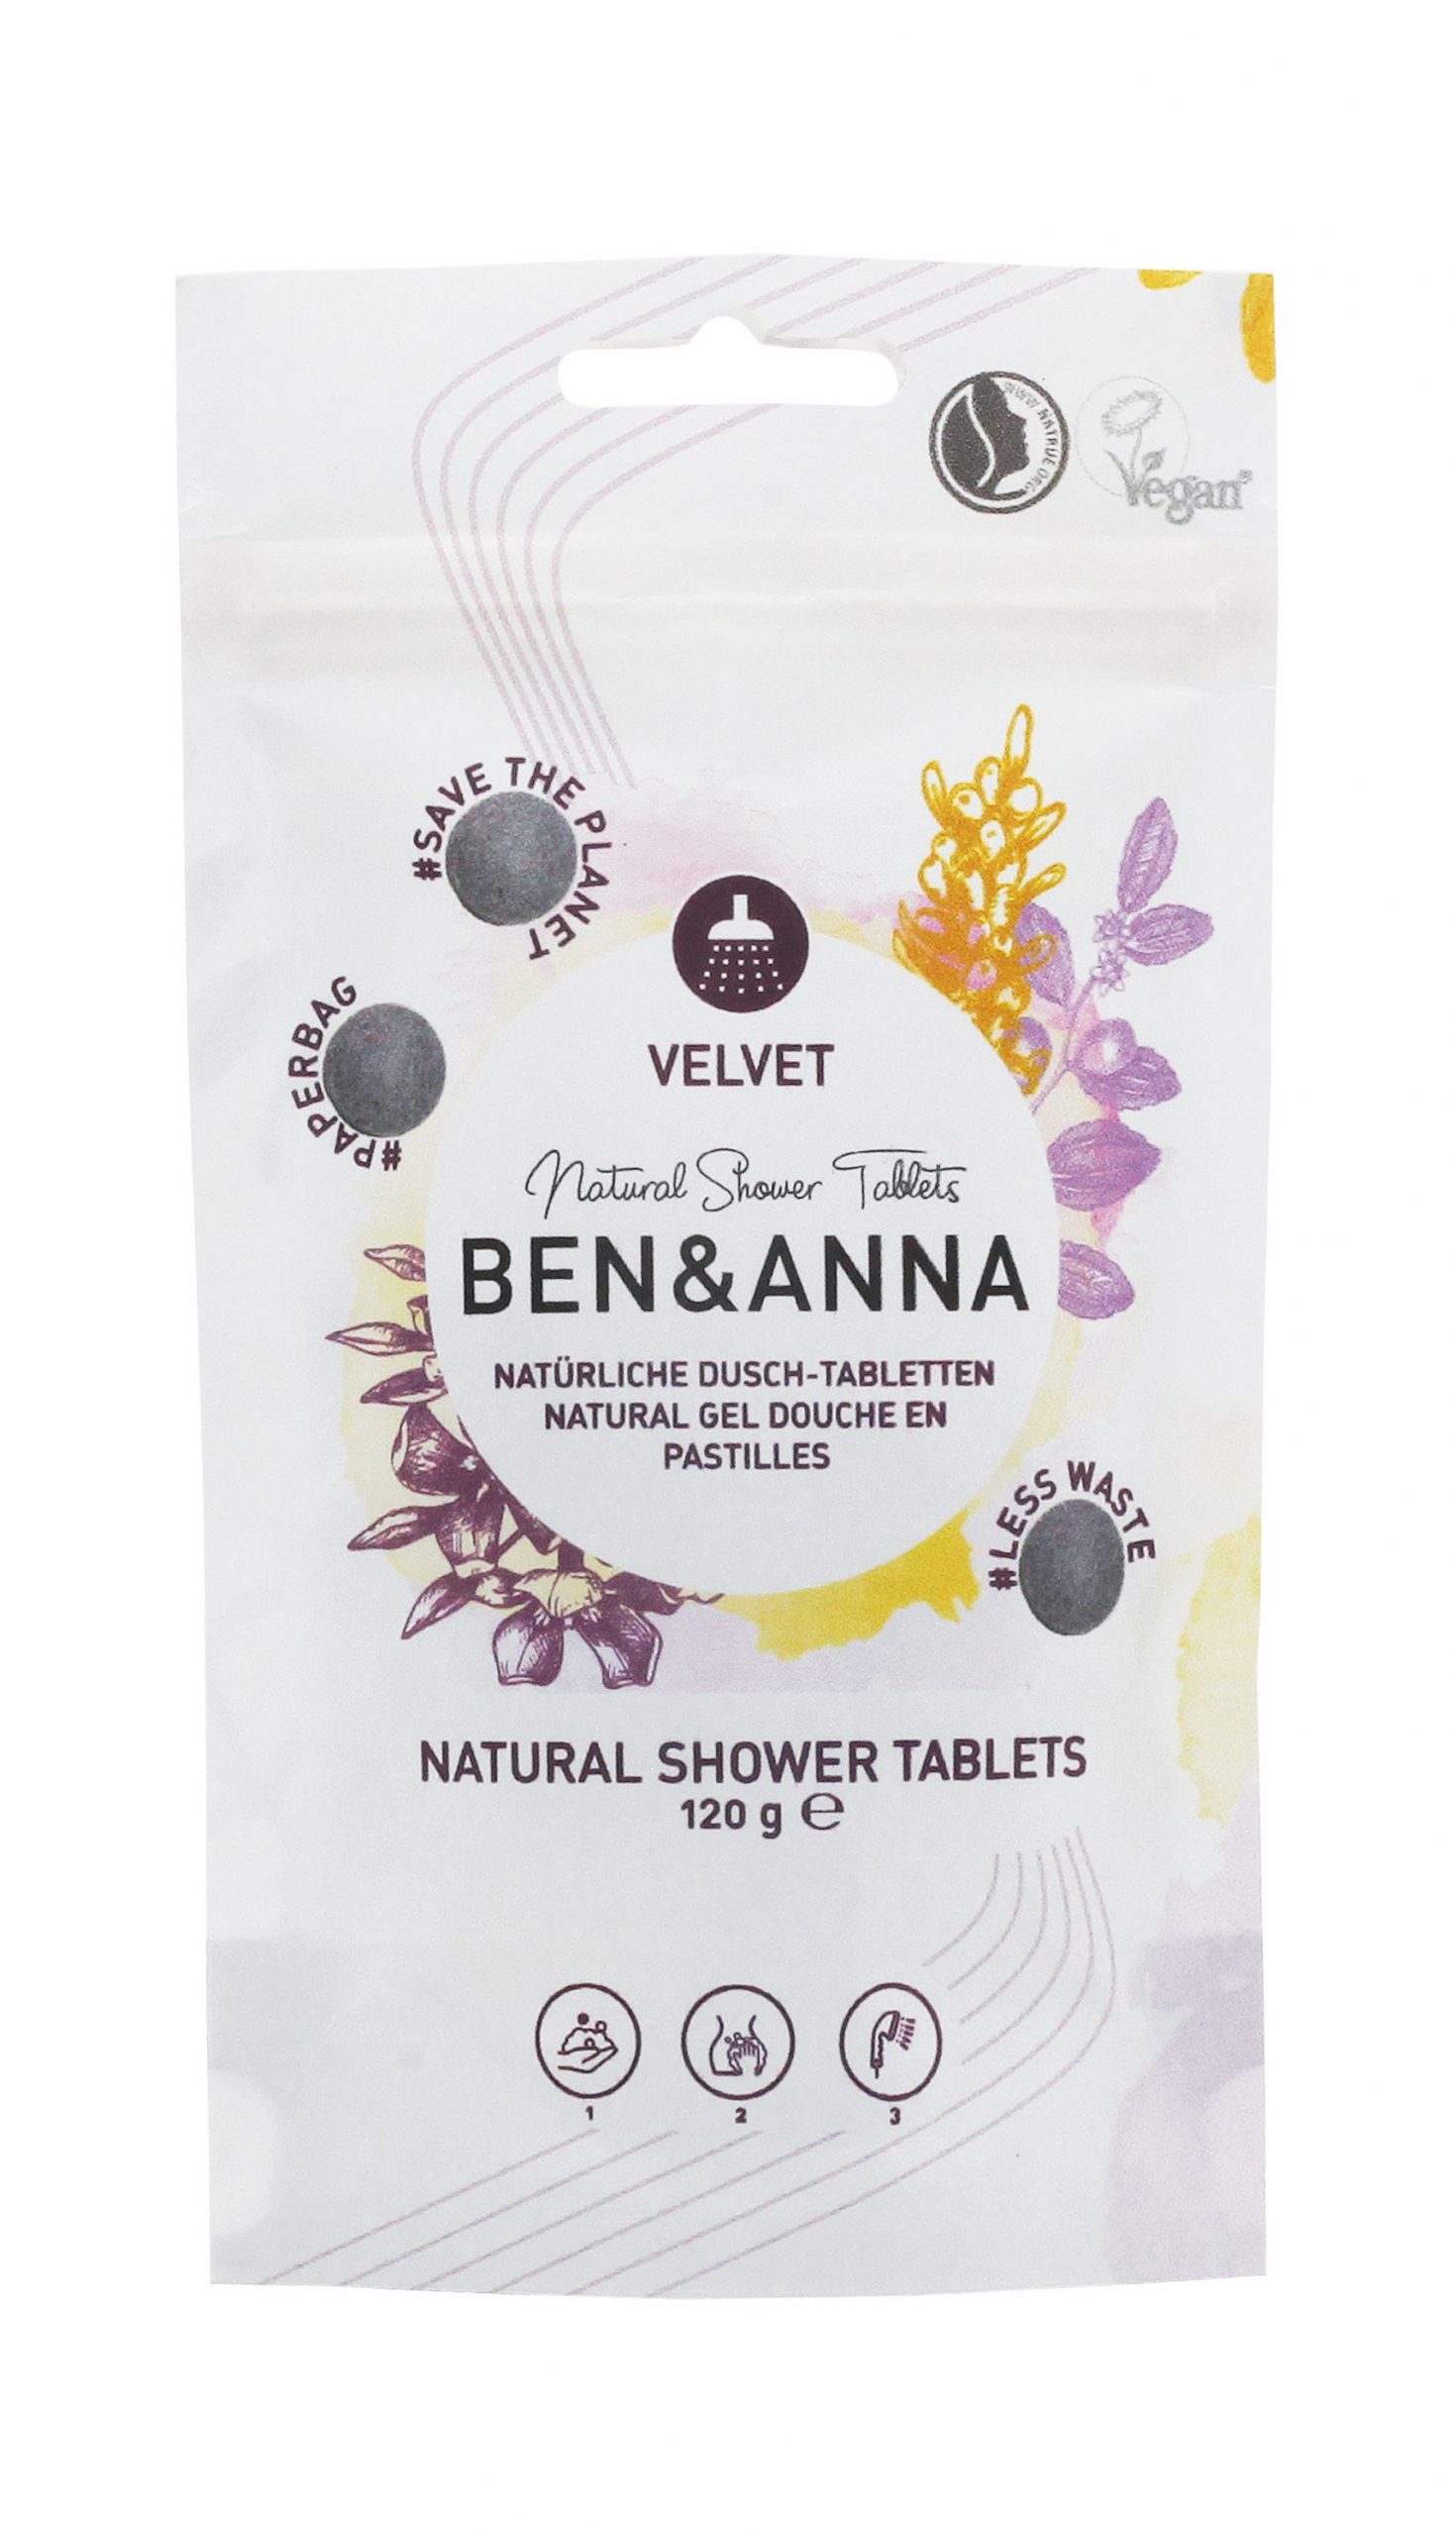 Sprchový gél BEN&ANNA tablety, 120g – Velvet